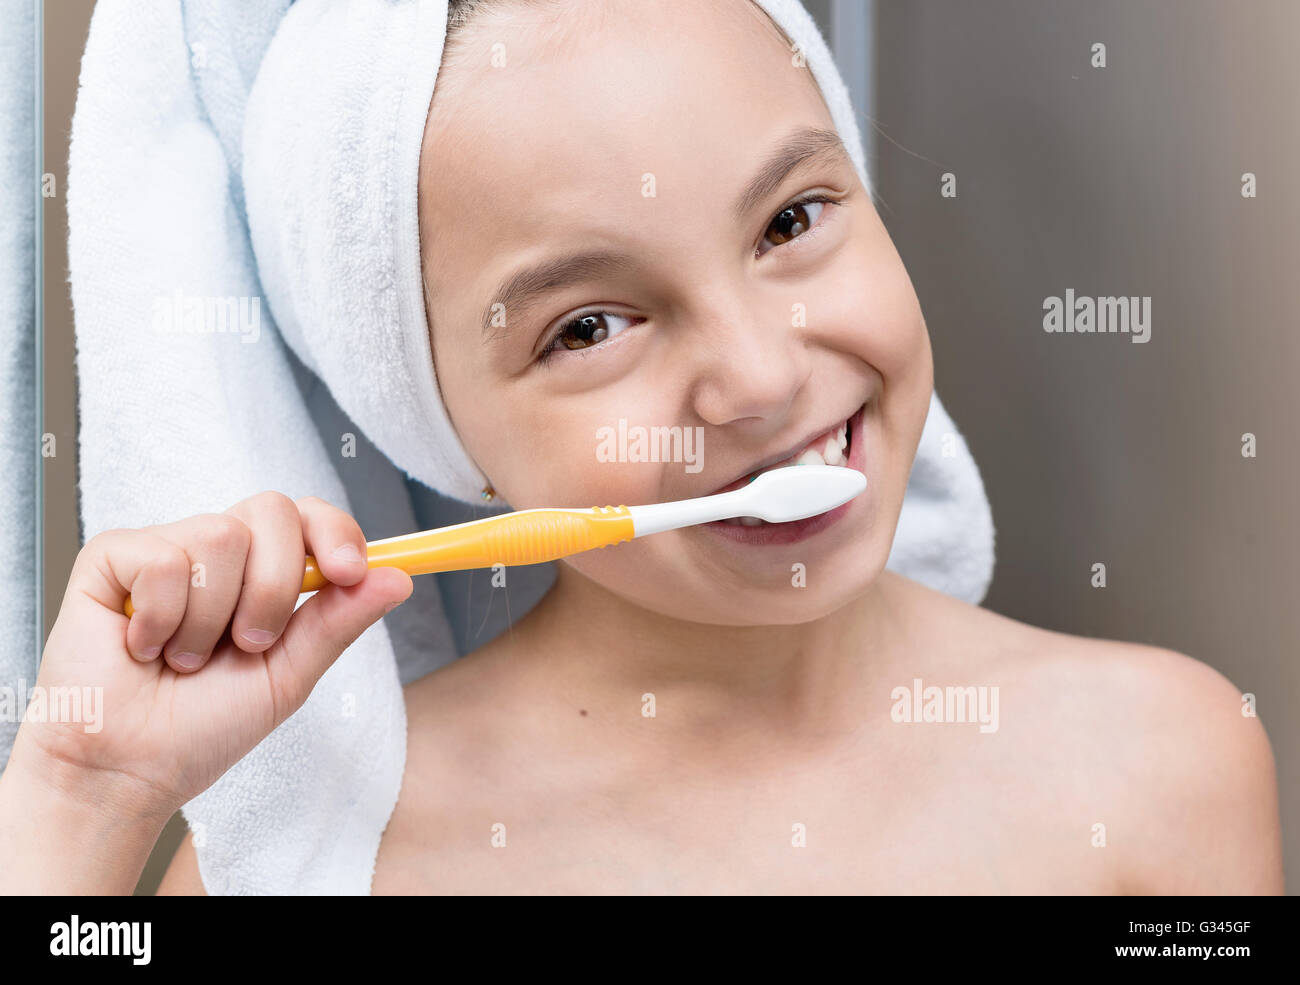 Smiling little girl brushing teeth Stock Photo